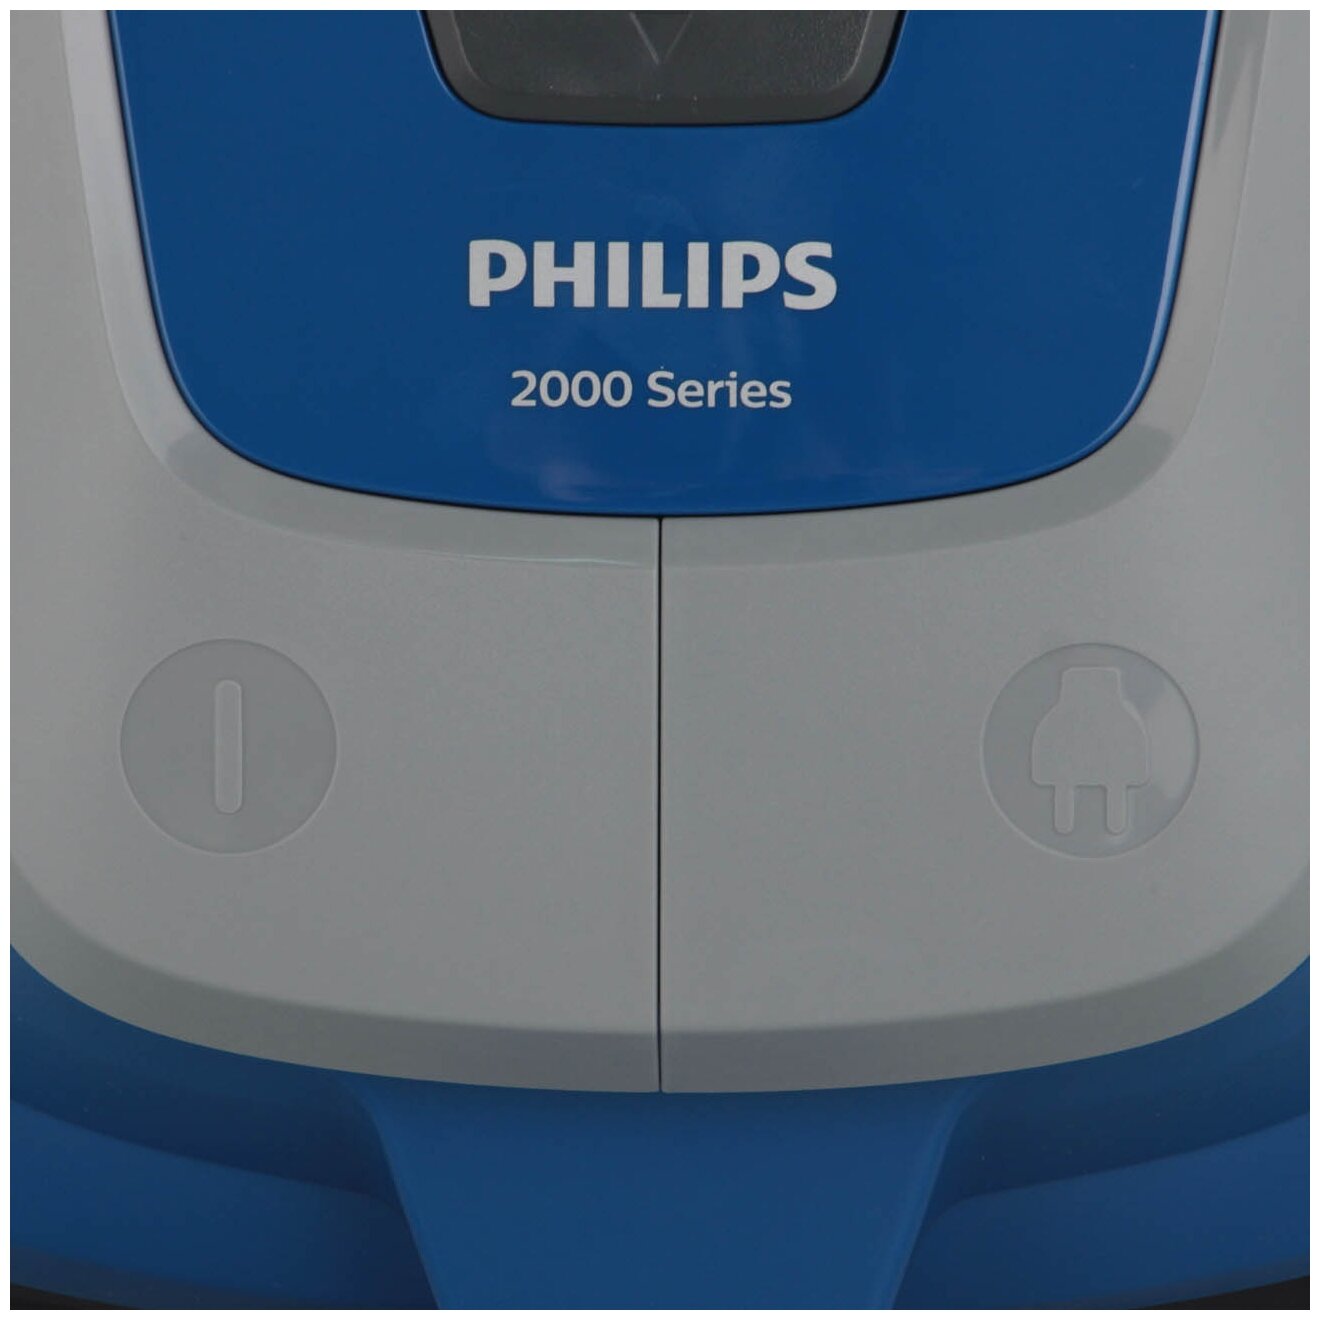 2000 series xb2042 01. Пылесос Philips xb2062/01. Philips xb2022/xb2023. Пылесос Philips xb2022. Пылесос с контейнером для пыли Philips xb2062/01.